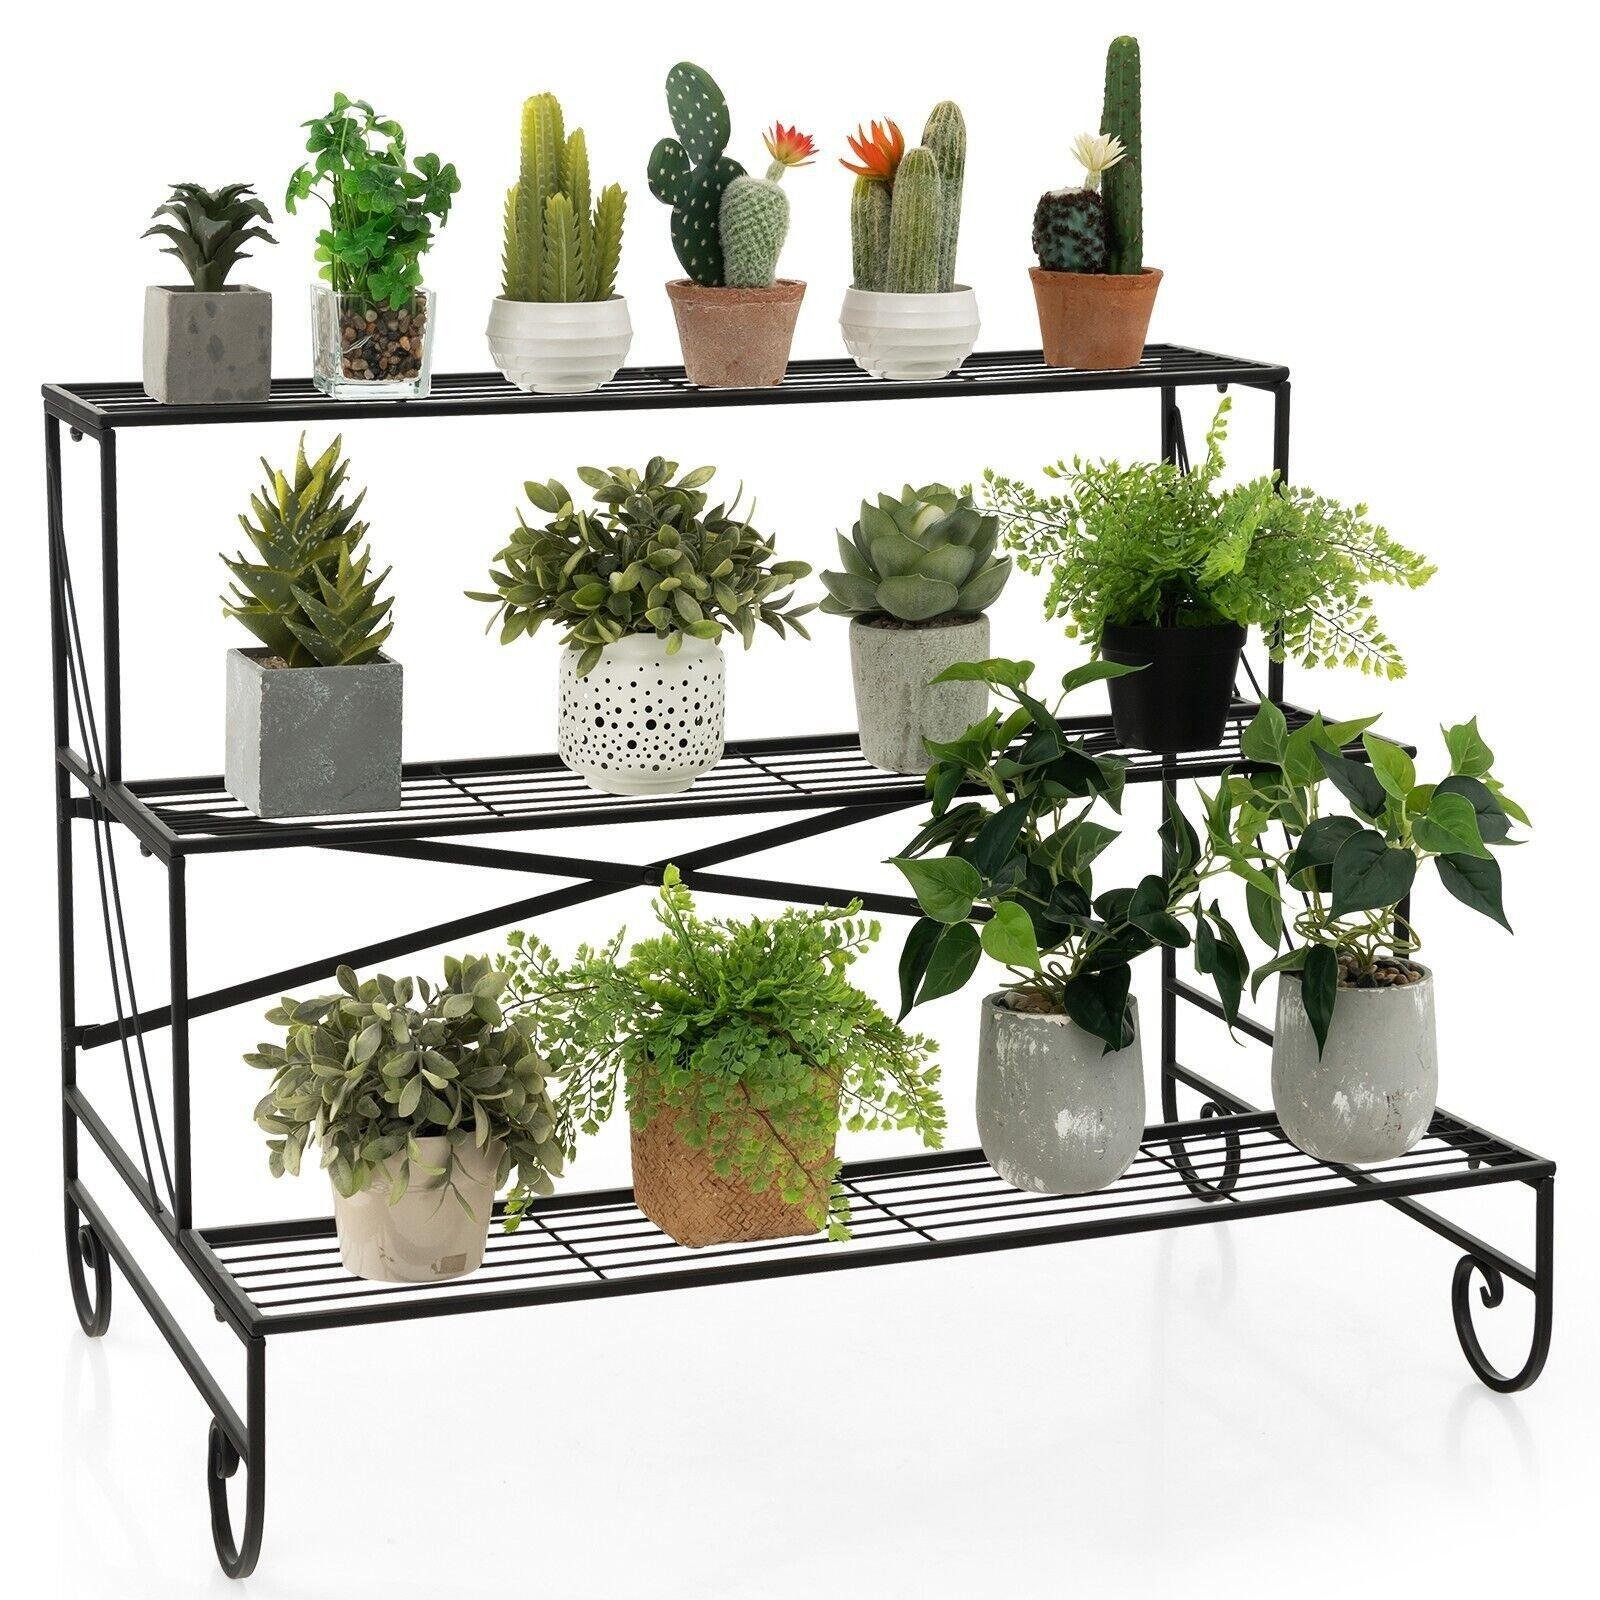 3 Tier Plant Stand Metal Flowers Pot Holder Storage Shelf Ladder Plants Display - image 1